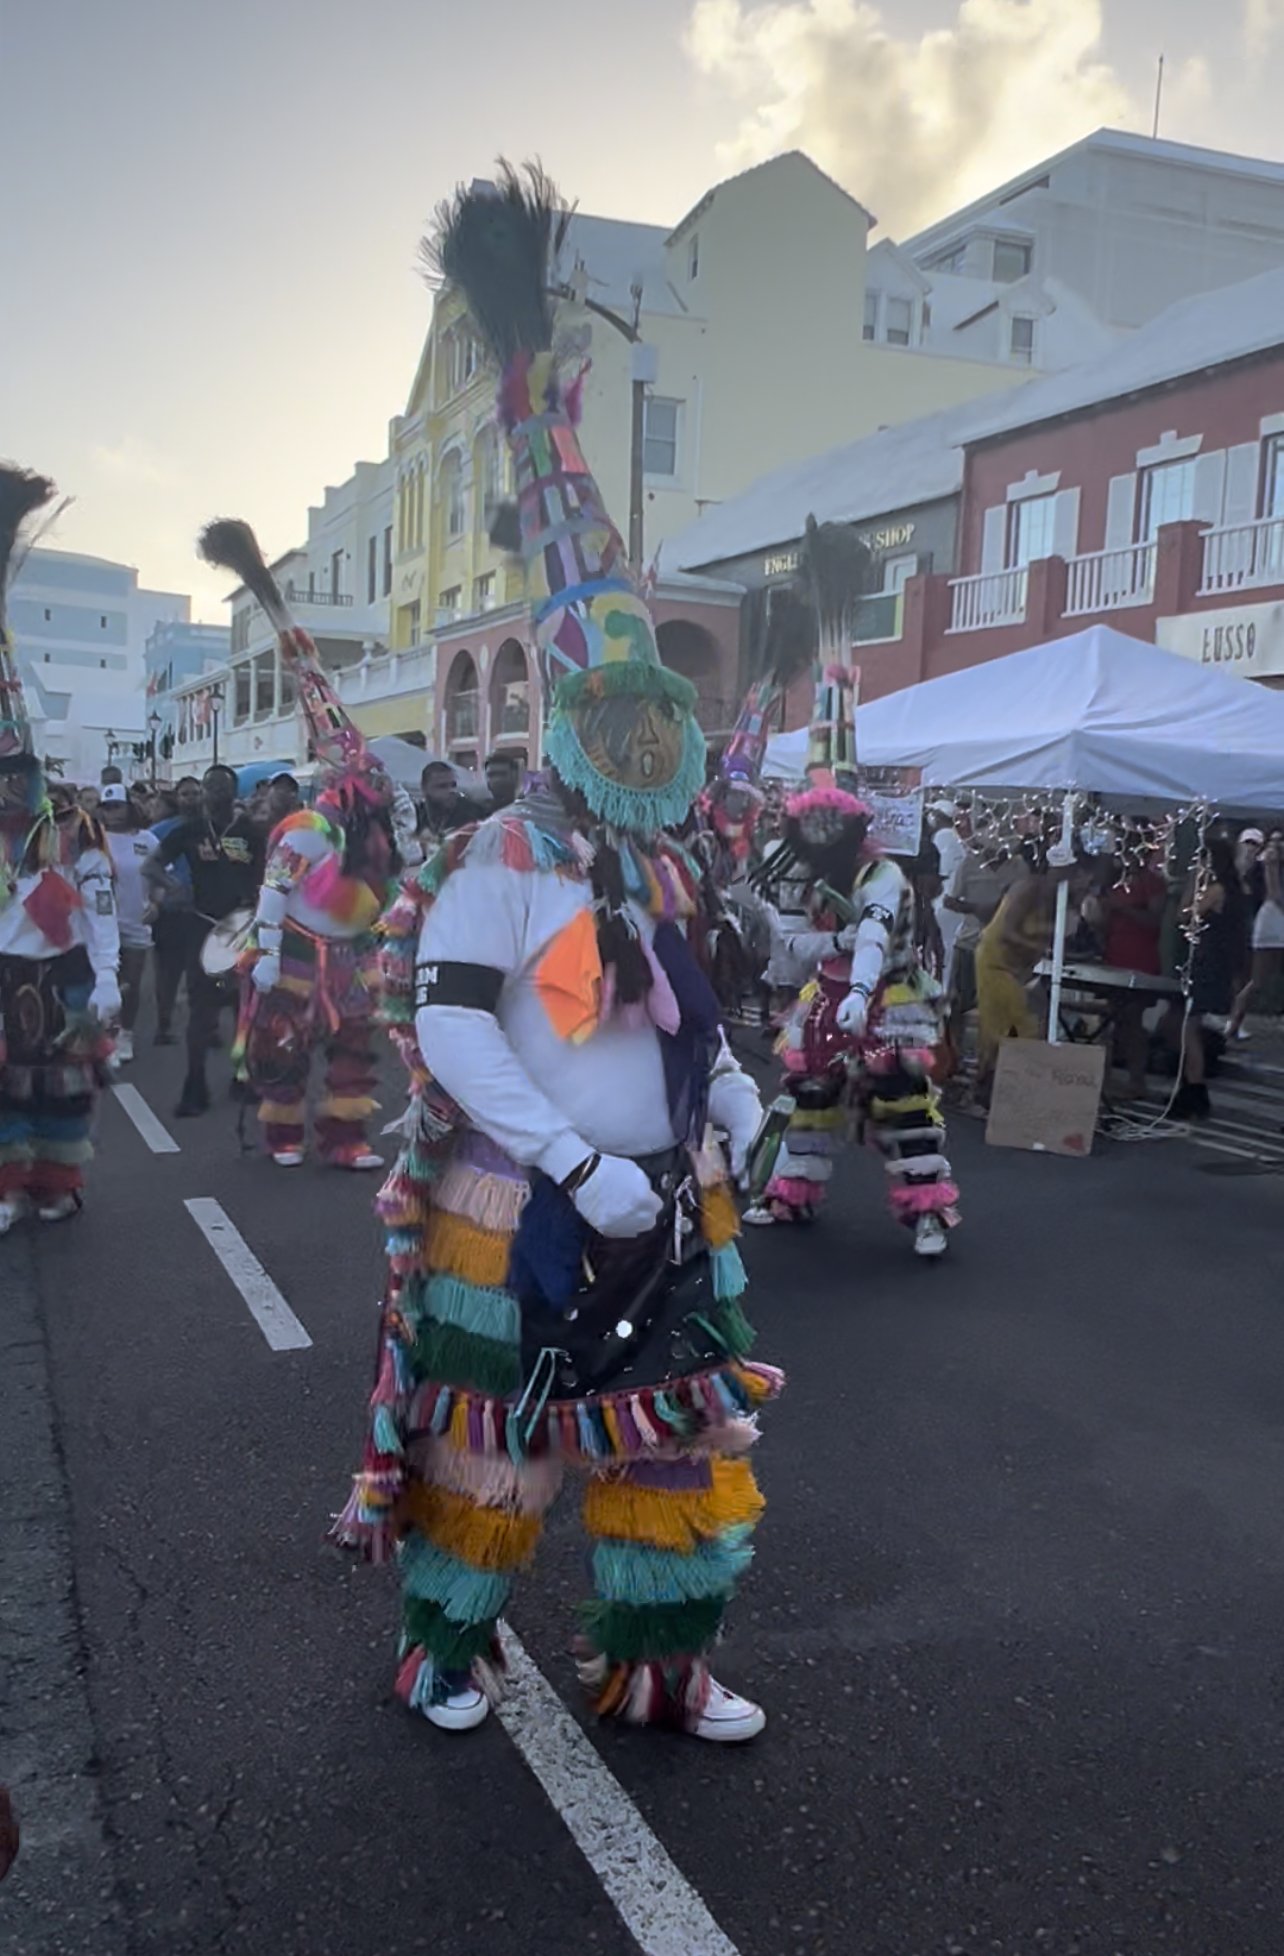 Bermuda-street fair.jpg